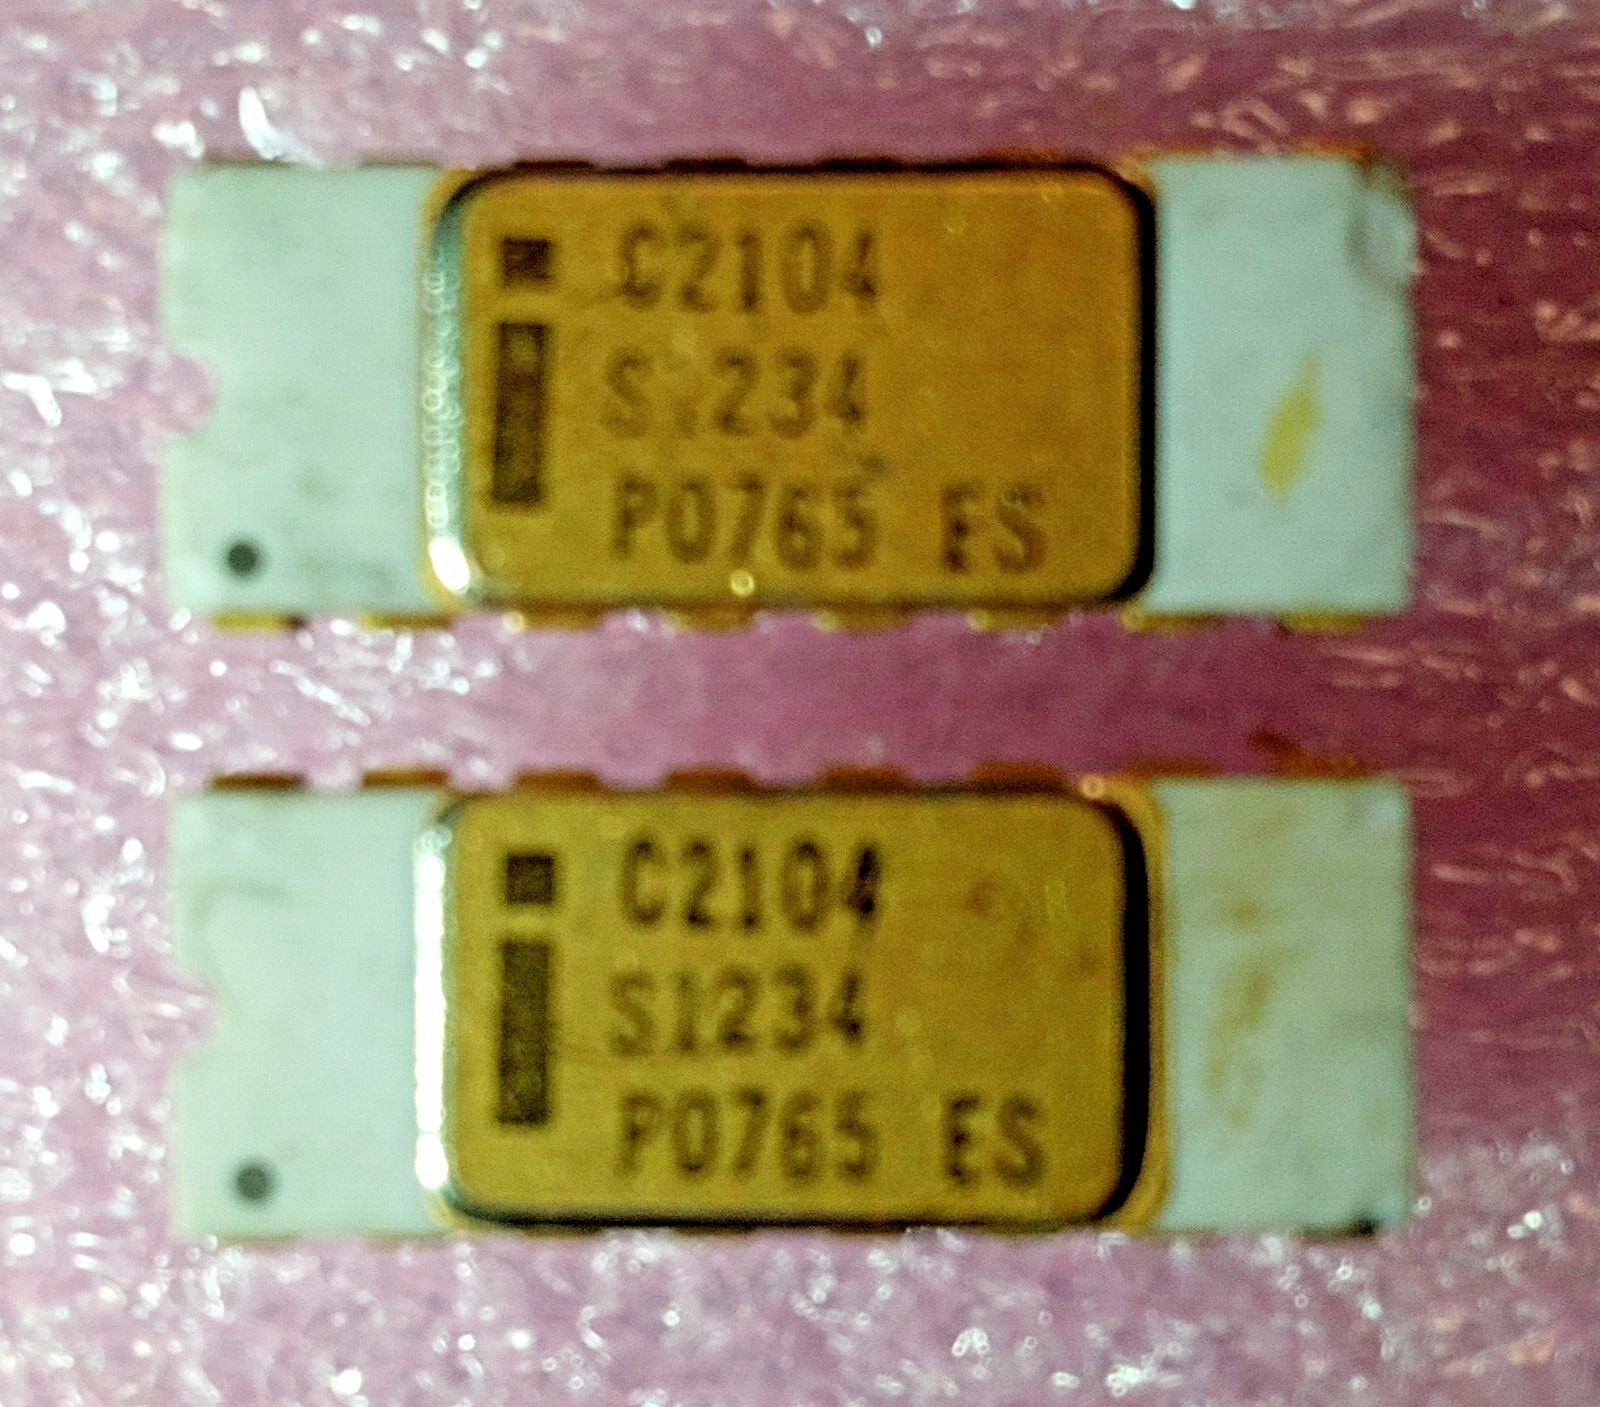 Apple 1 TRS-80 Intel C2104 Memory Gold CERDIP 4096x1 DRAM Vintage LOT of 2 PCS